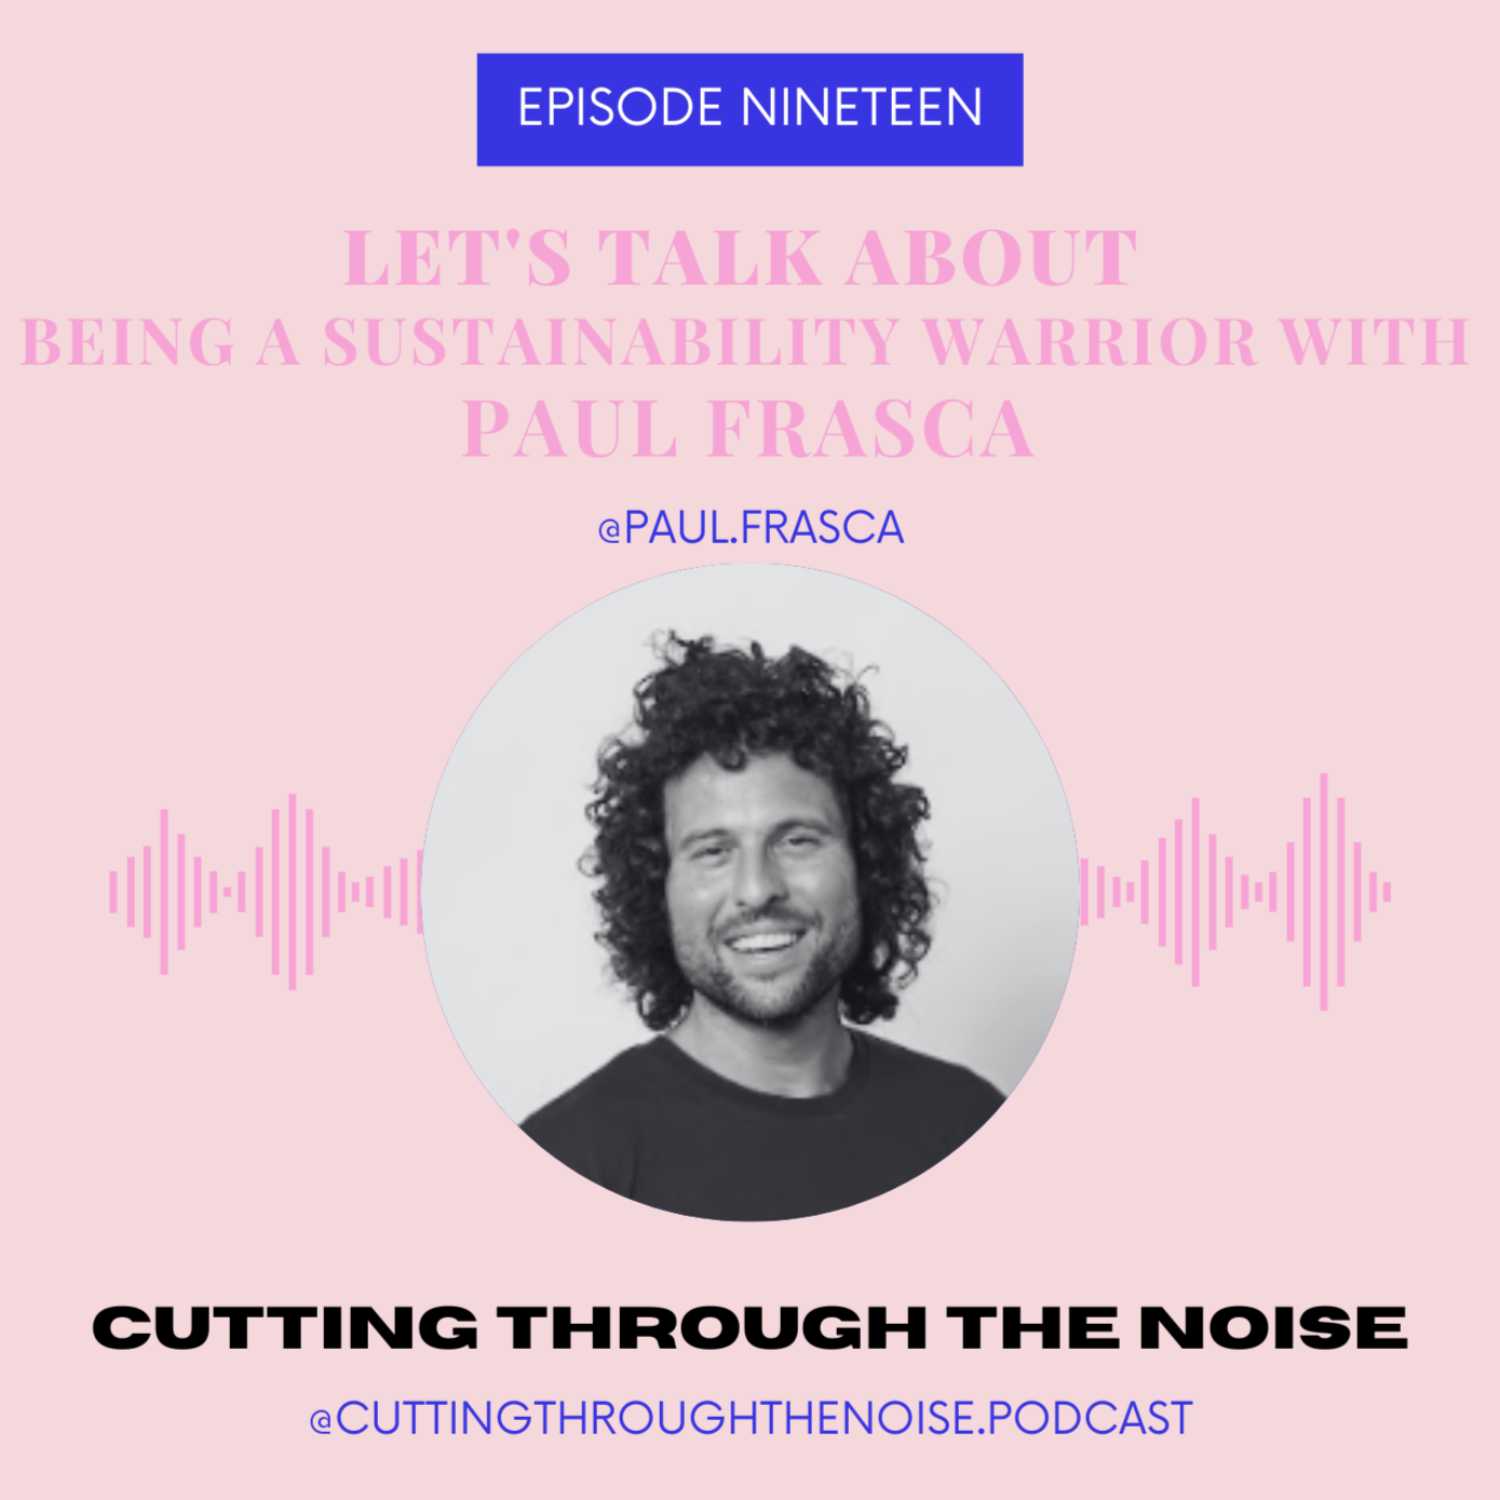 Episode Nineteen: Paul Frasca